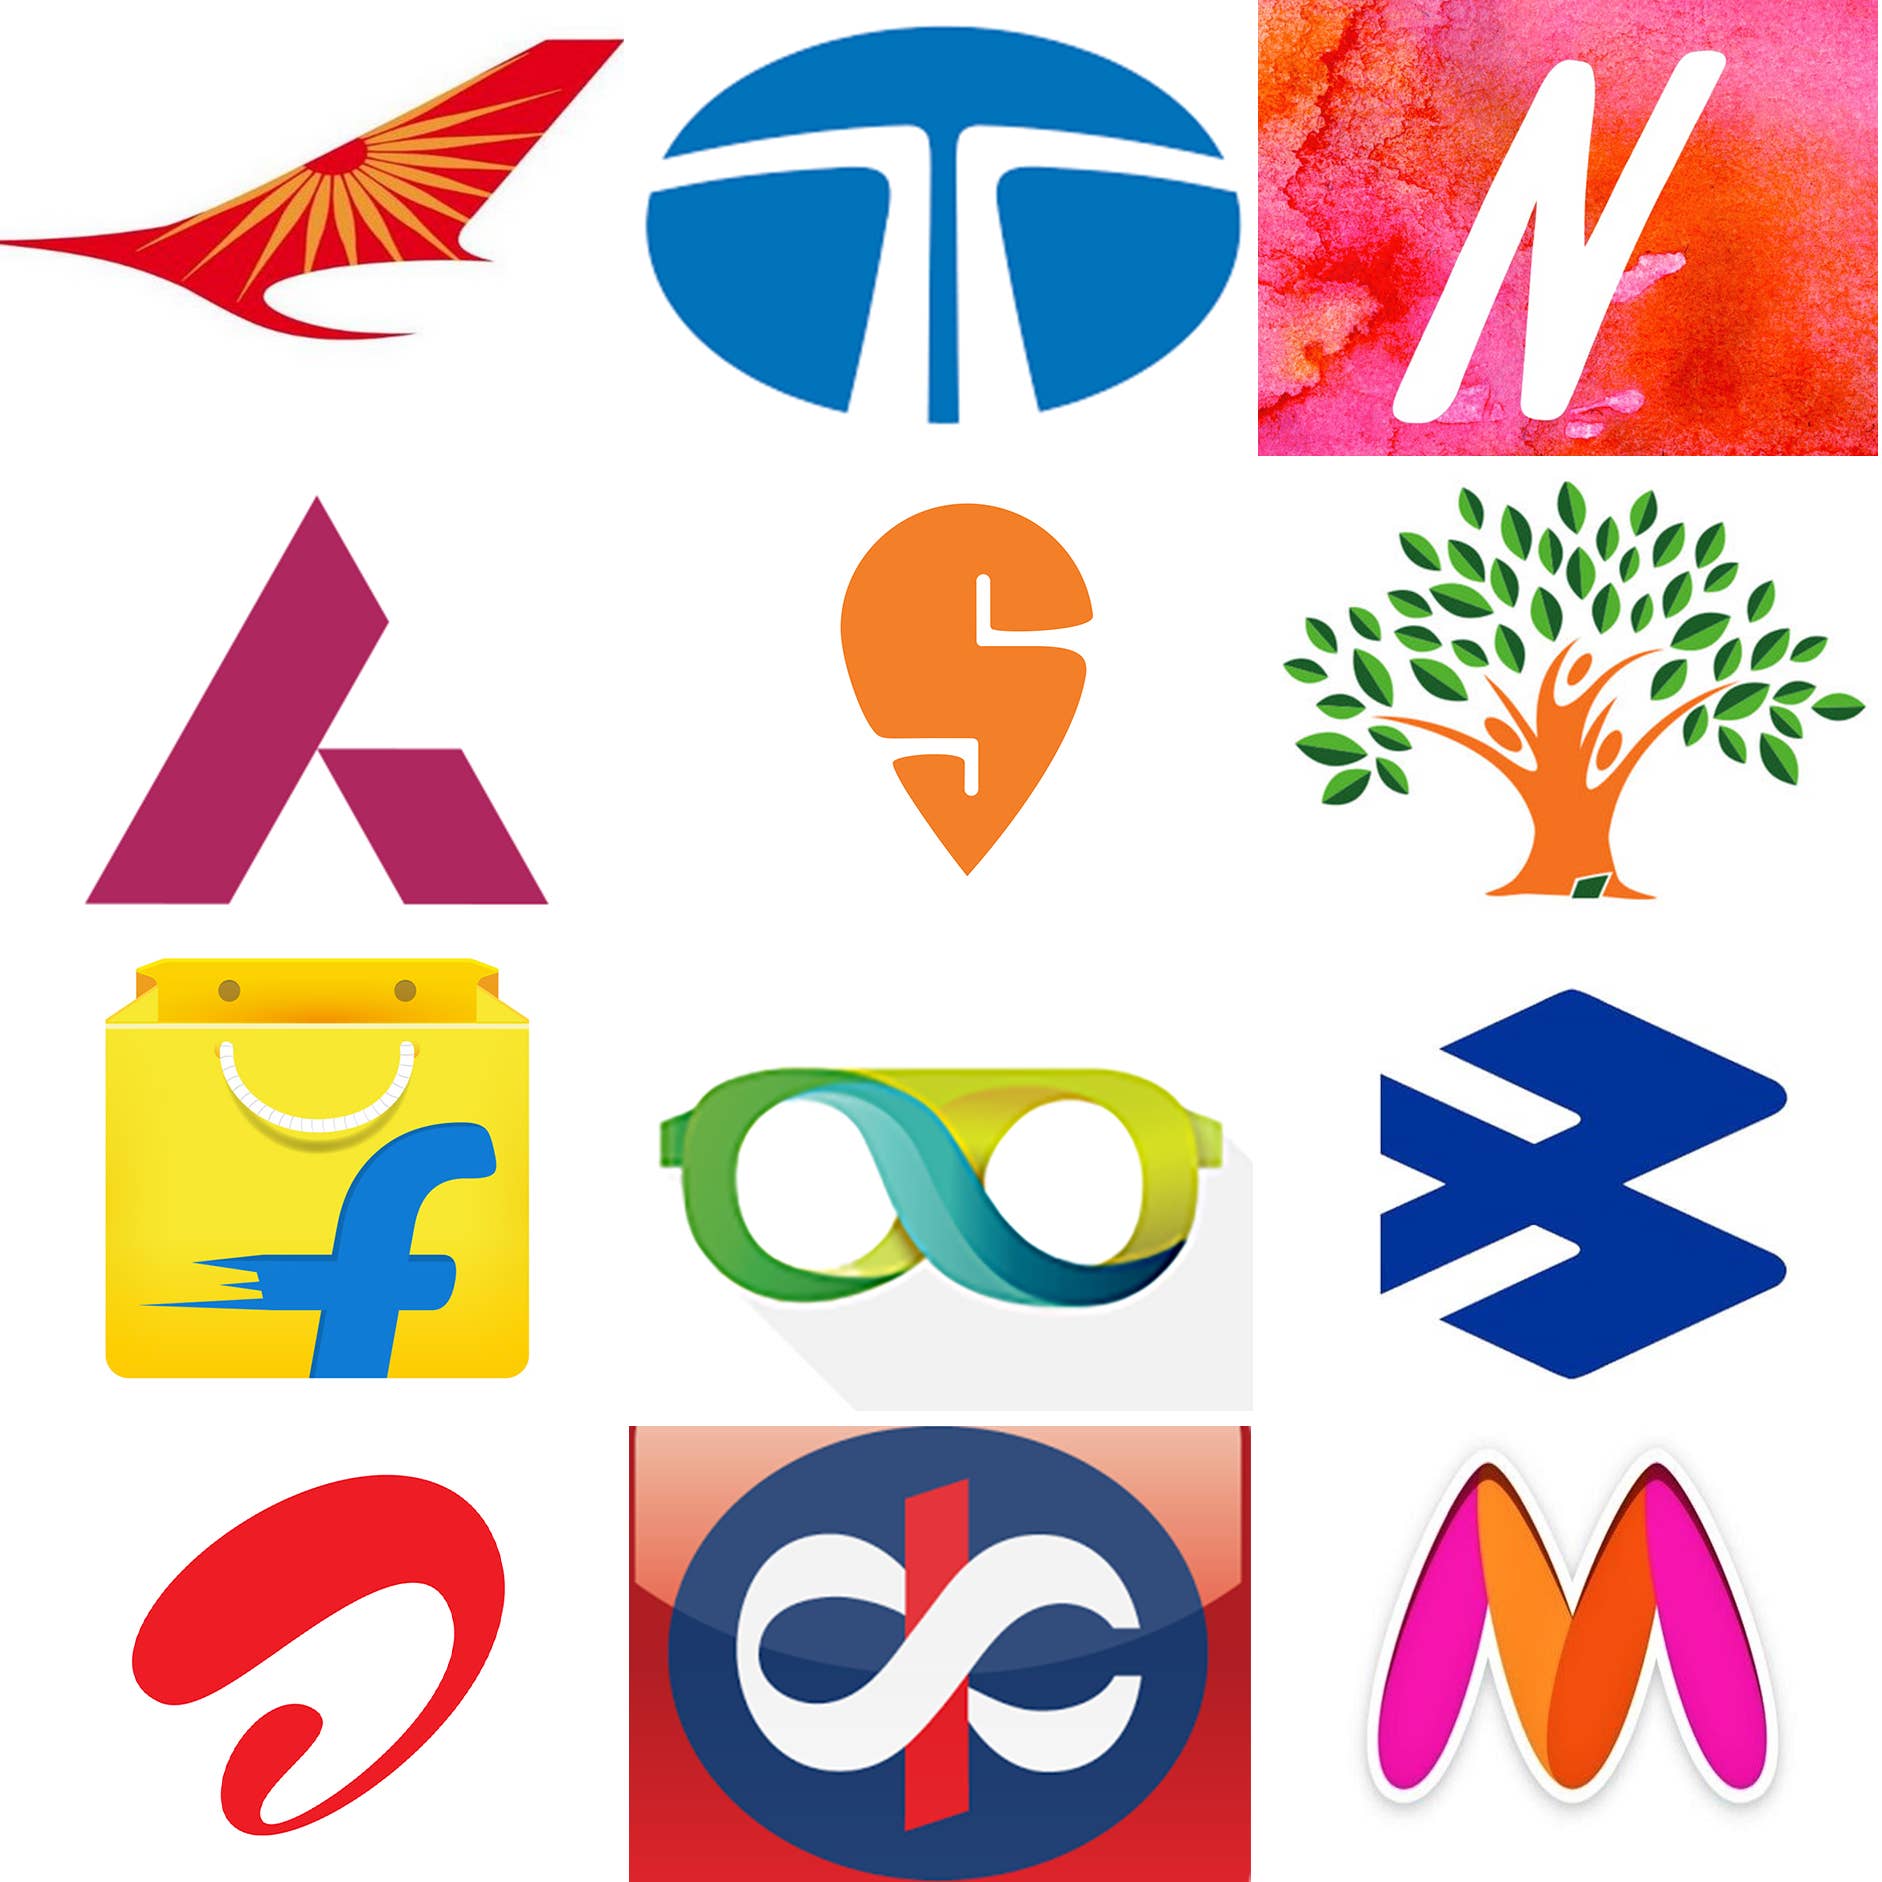 Indian Brand Logos Quiz